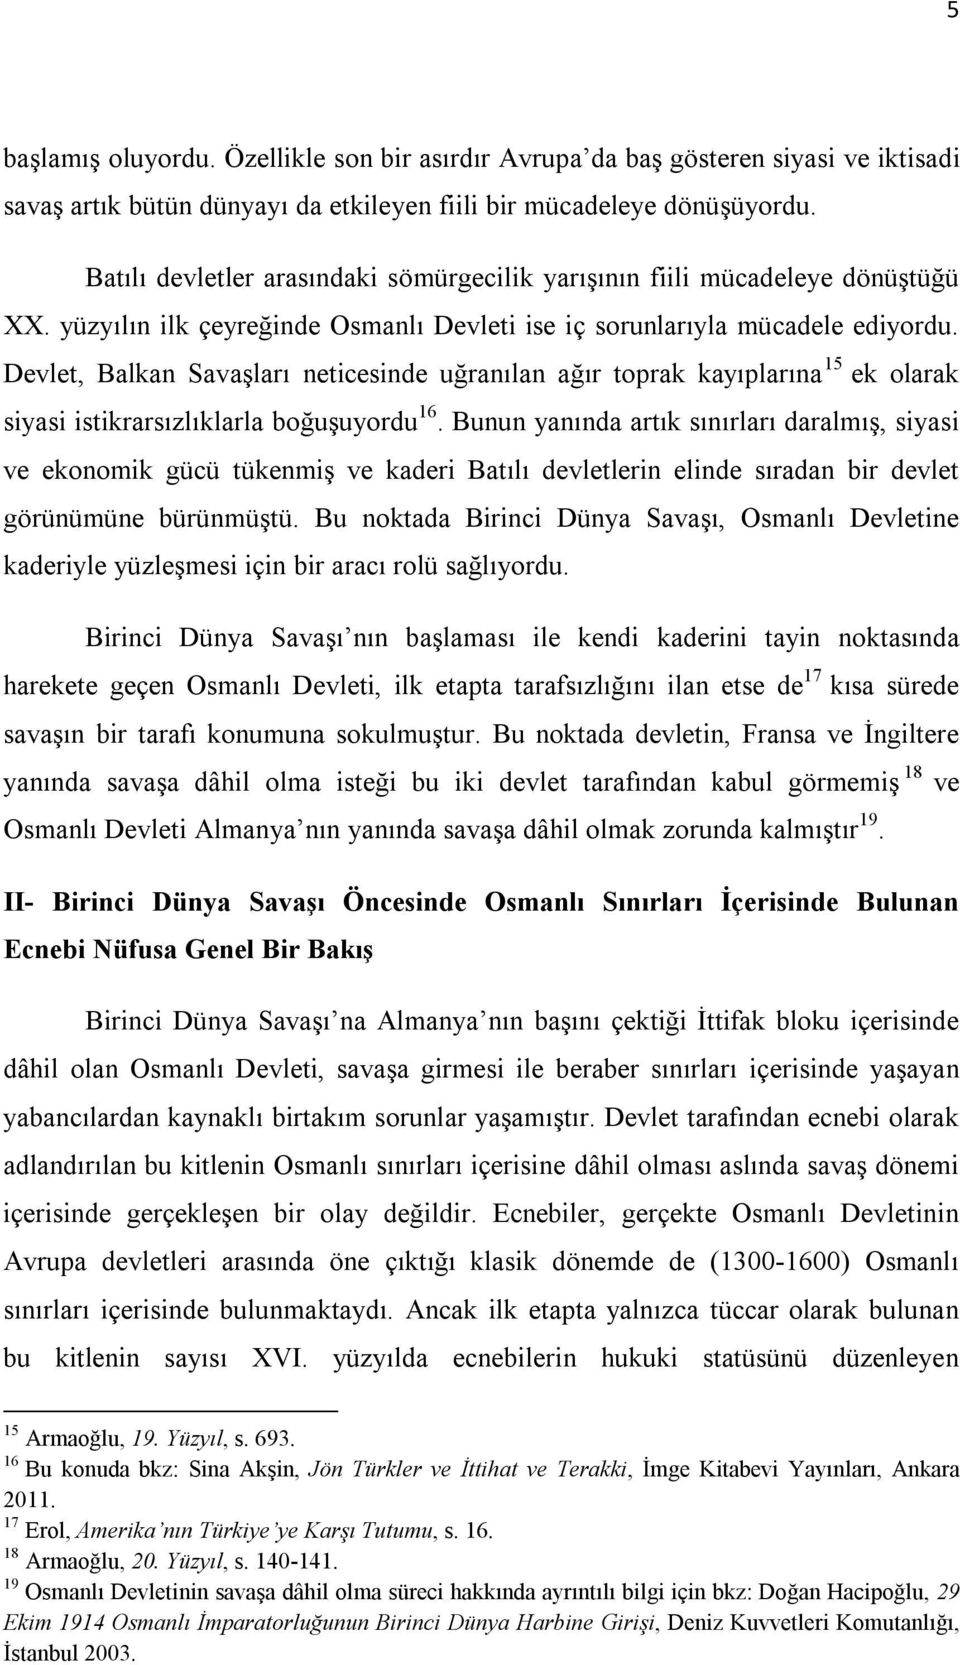 Osmanli Devletinin I Dunya Savasinda Savastigi Cepheler Osmanli Devleti